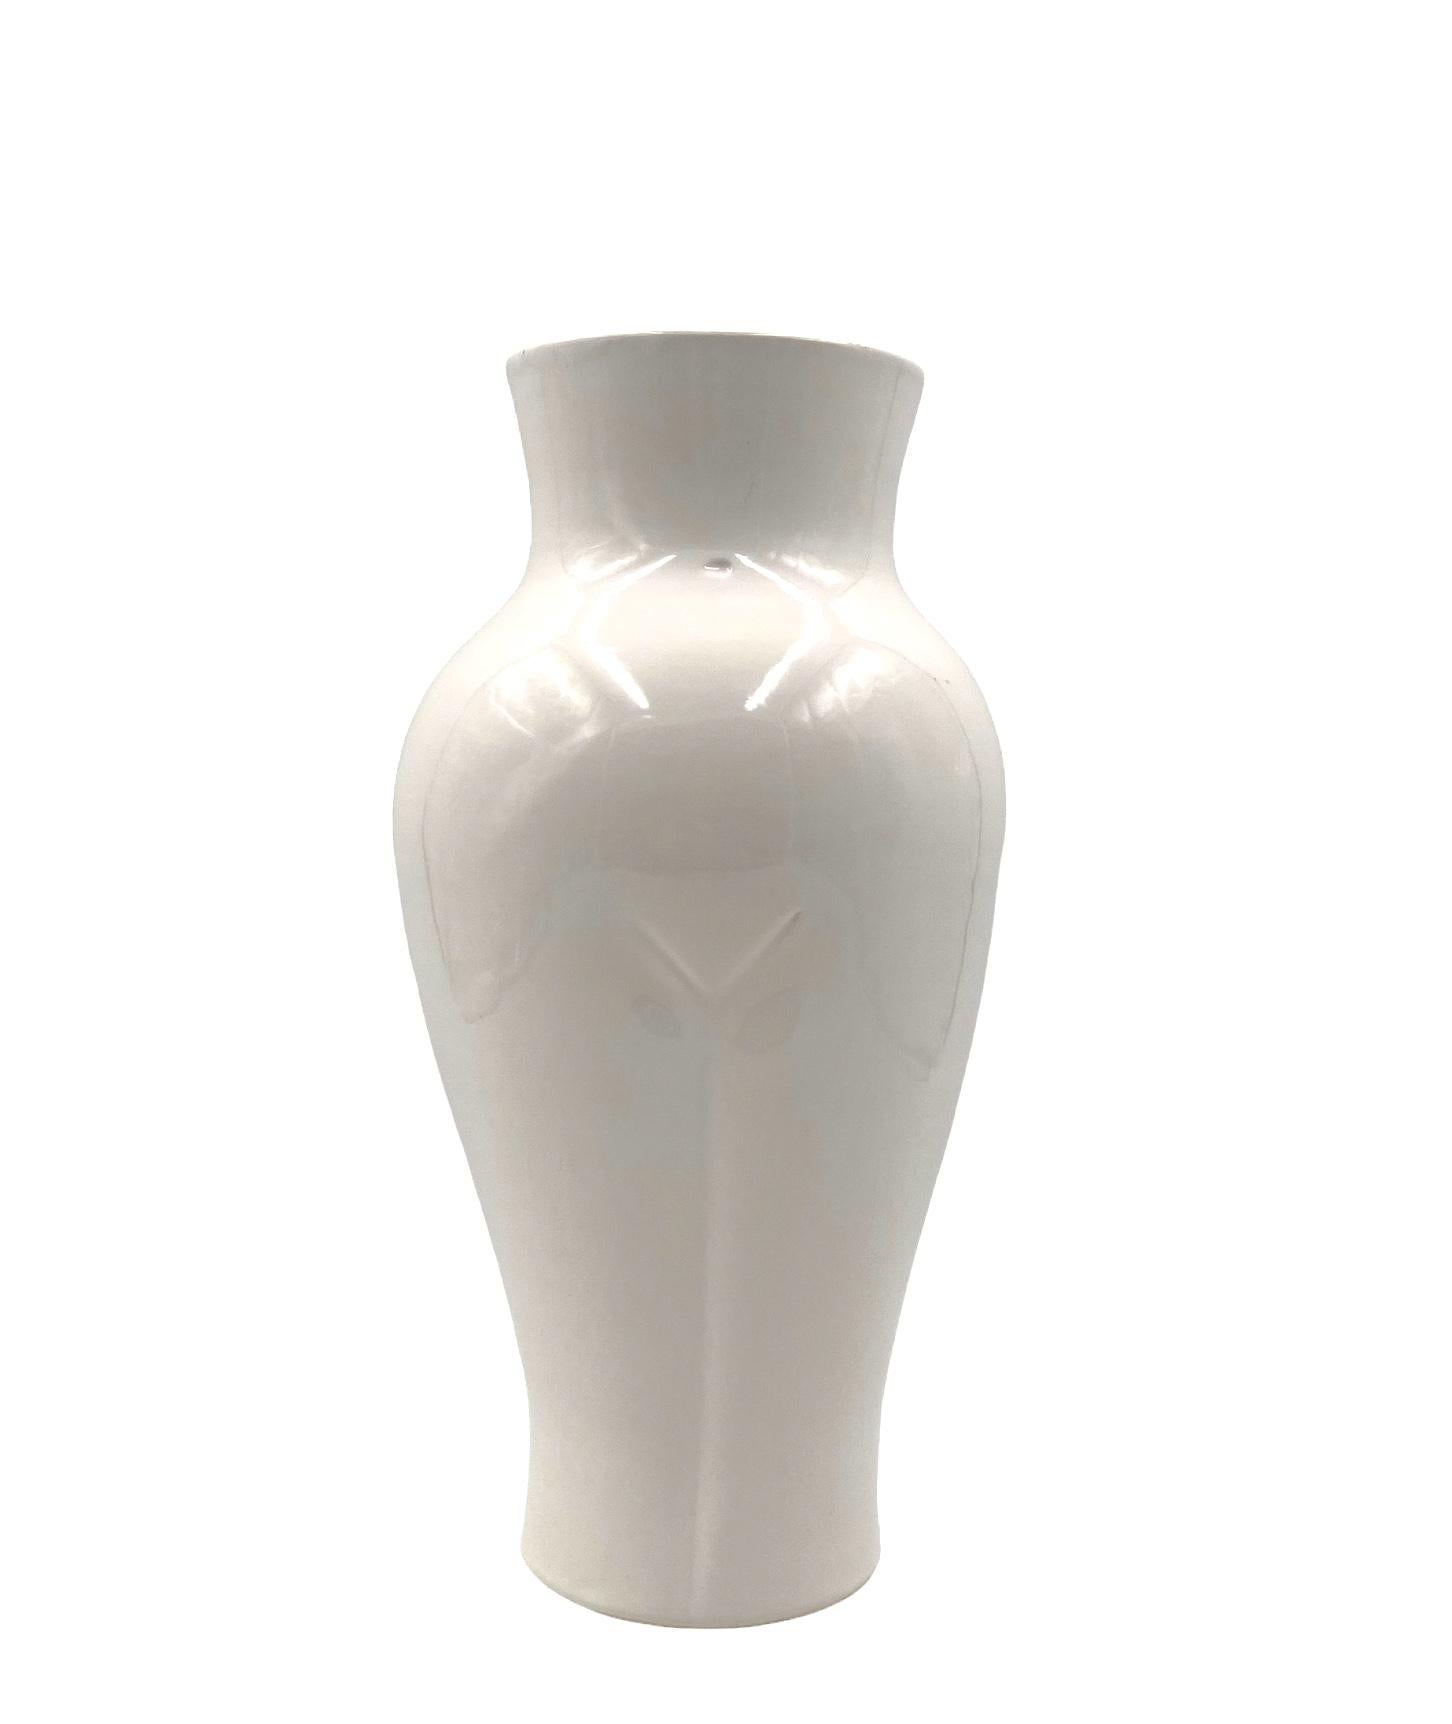 Postmodern ceramic 'Femme' vase, Baba, Vallauris France ca. 1980s For Sale 6